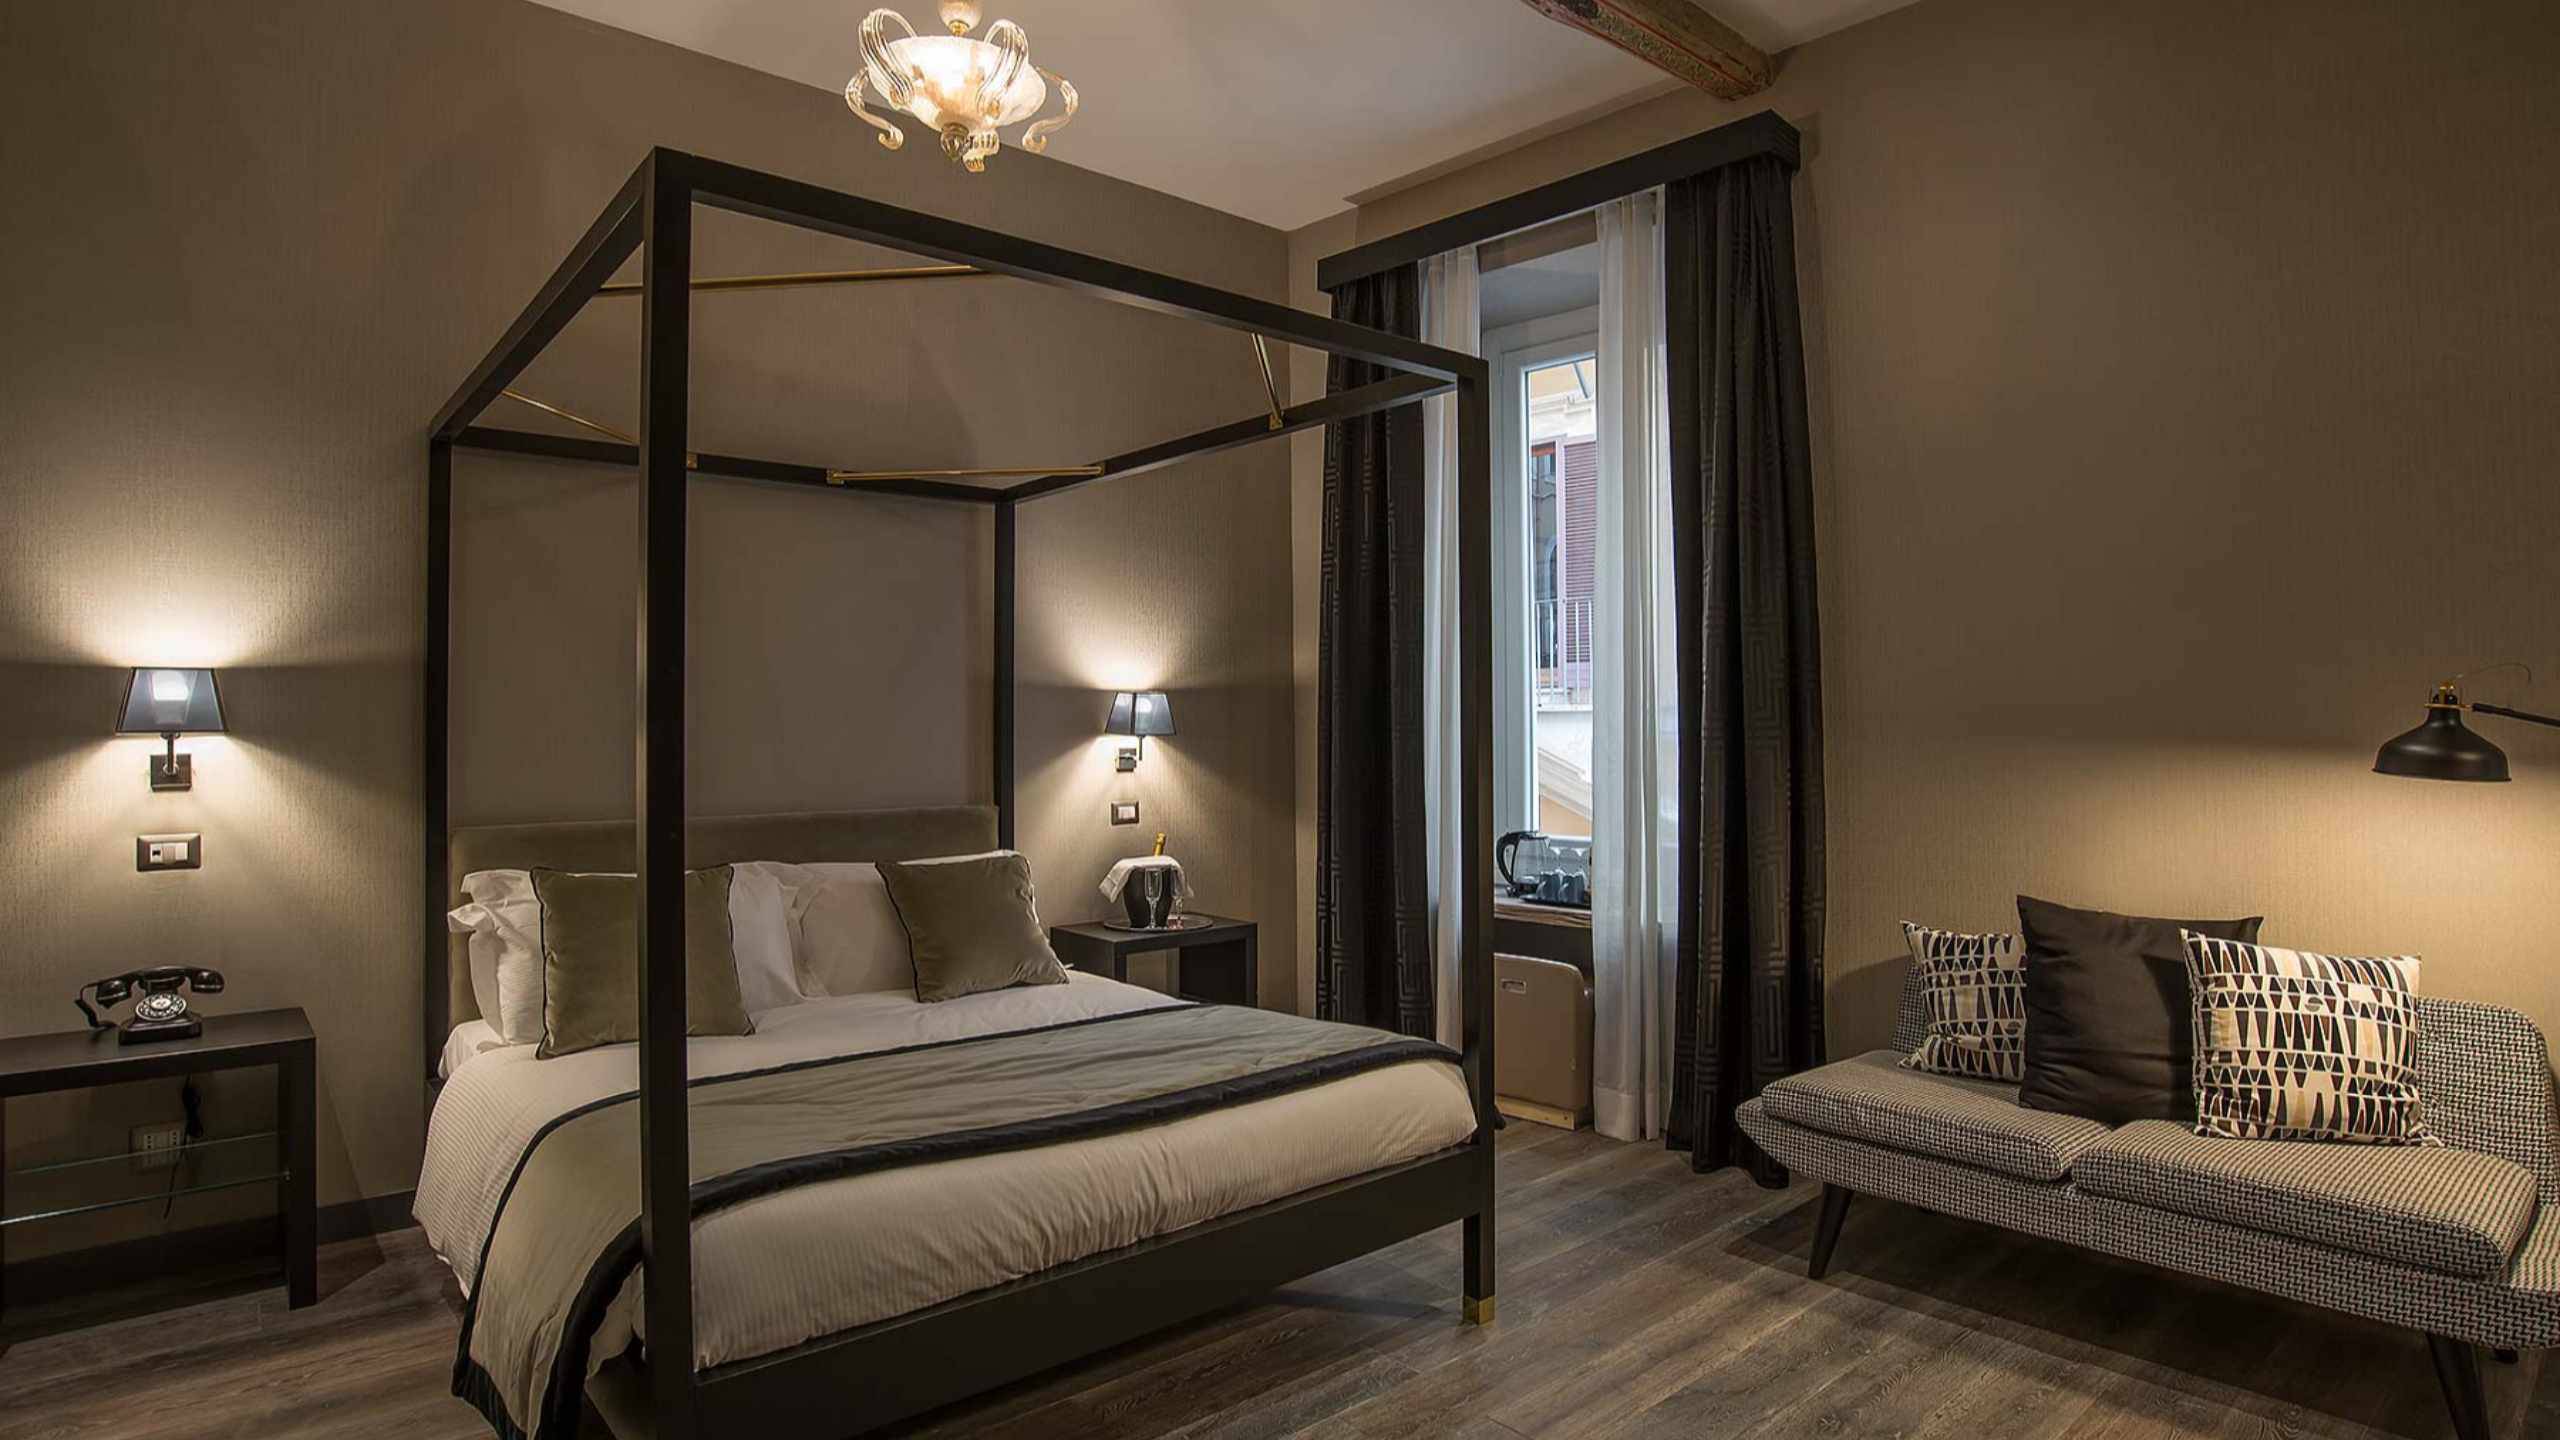 Colonna-suite-del-corso-rome-deluxe-room-bed-102n-12